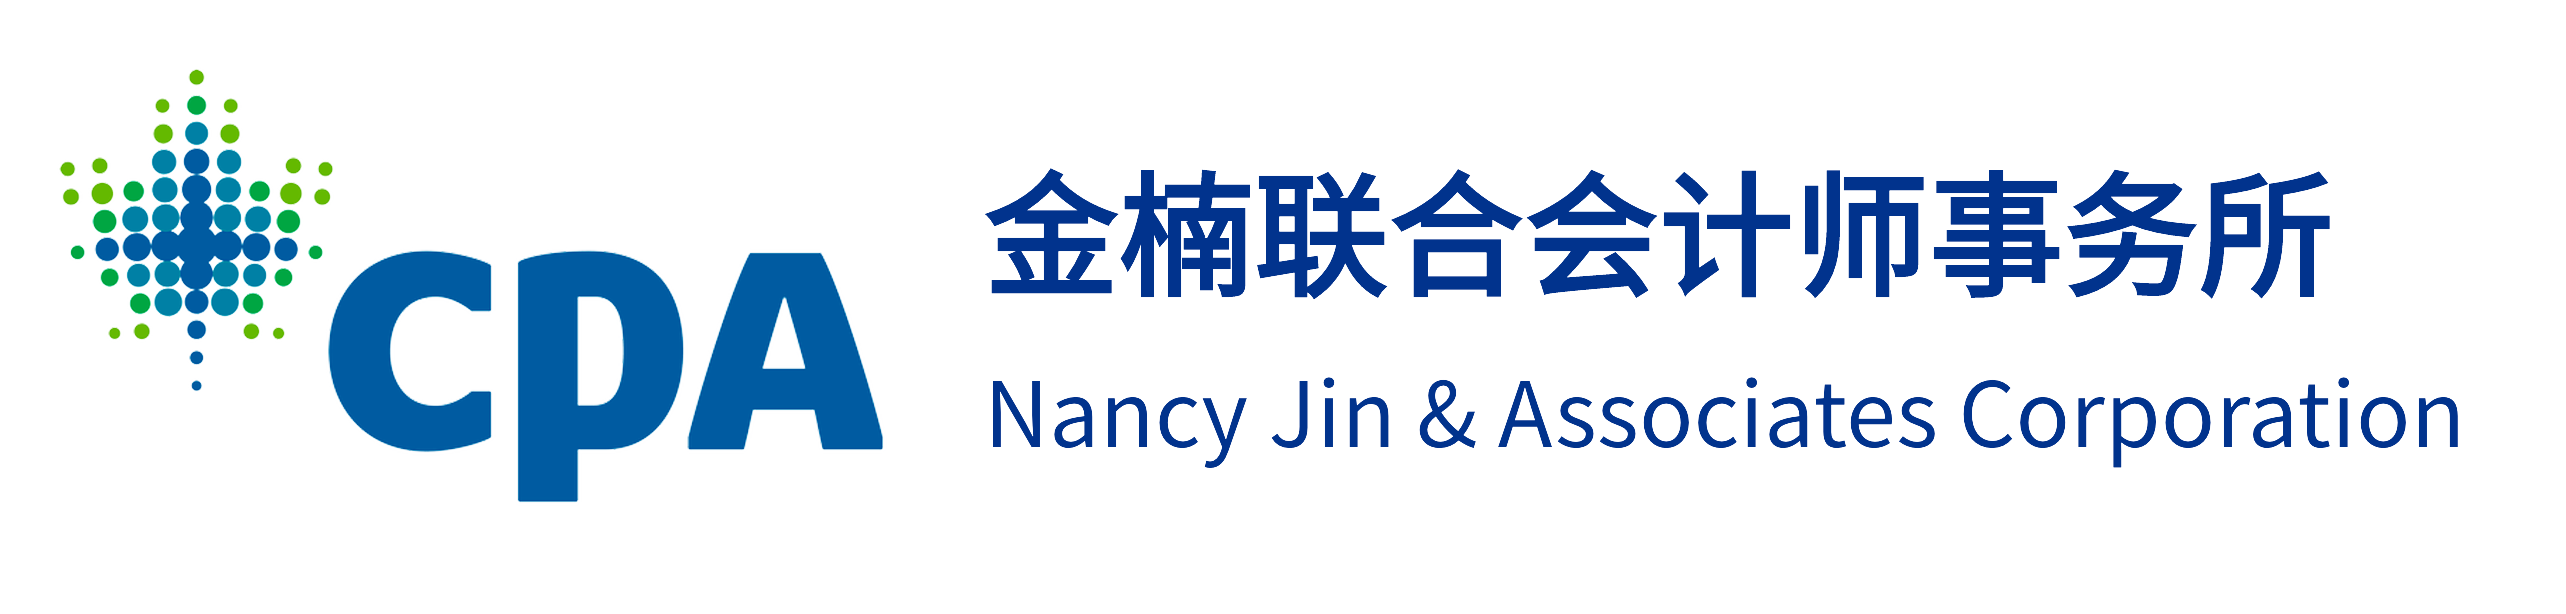 Nancy Jin & Associates Corporation